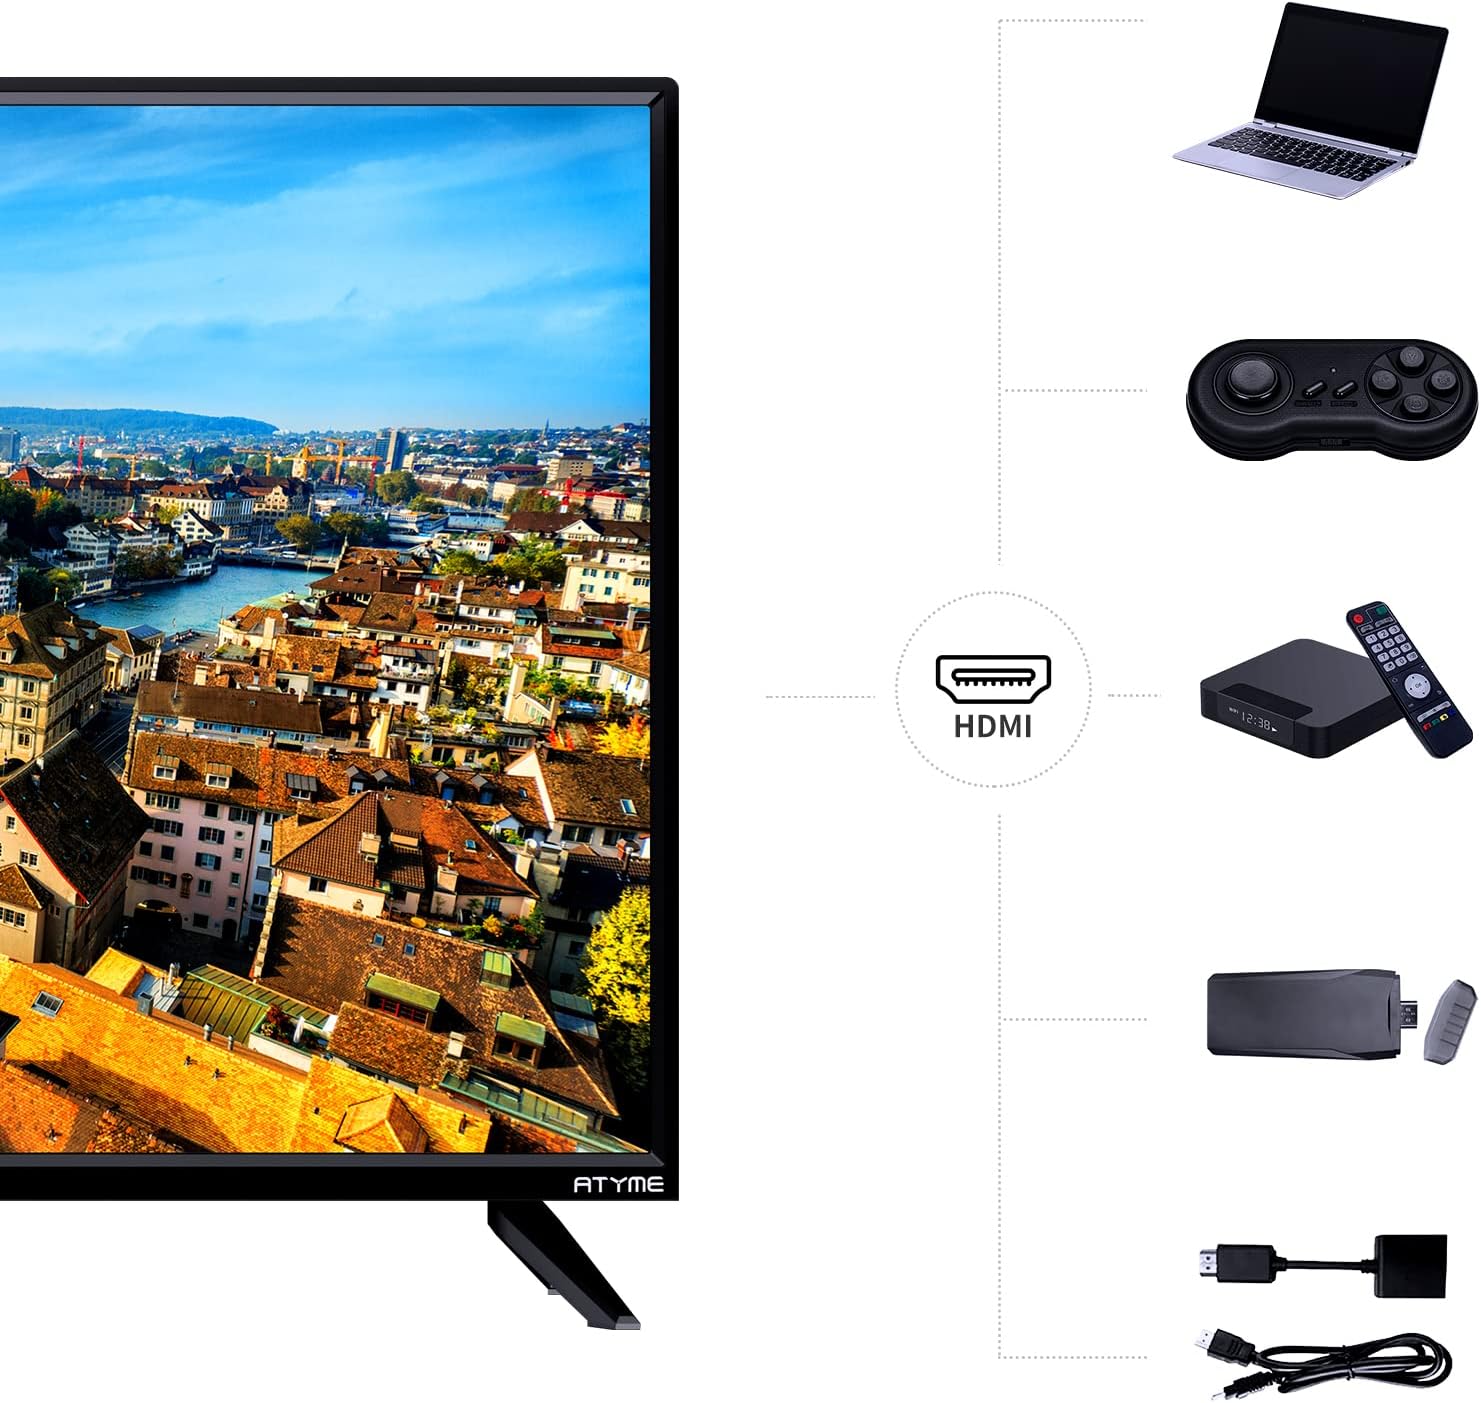  TCL 40S325 TV inteligente de 40 pulgadas 1080p Smart